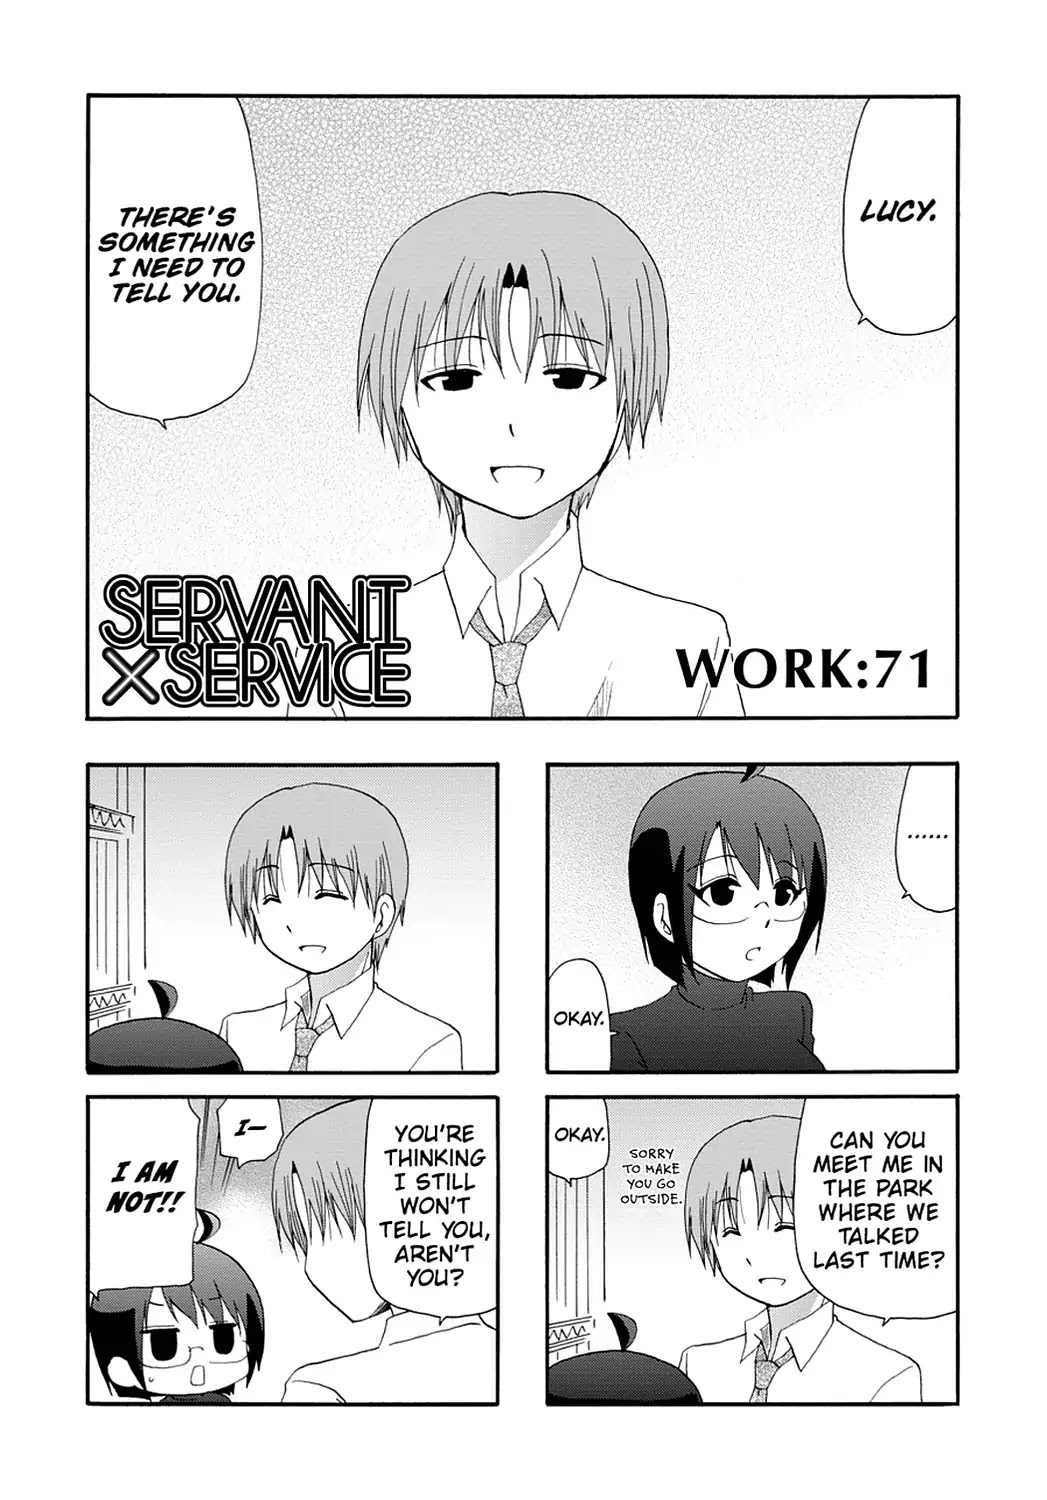 servant_x_service_71_1